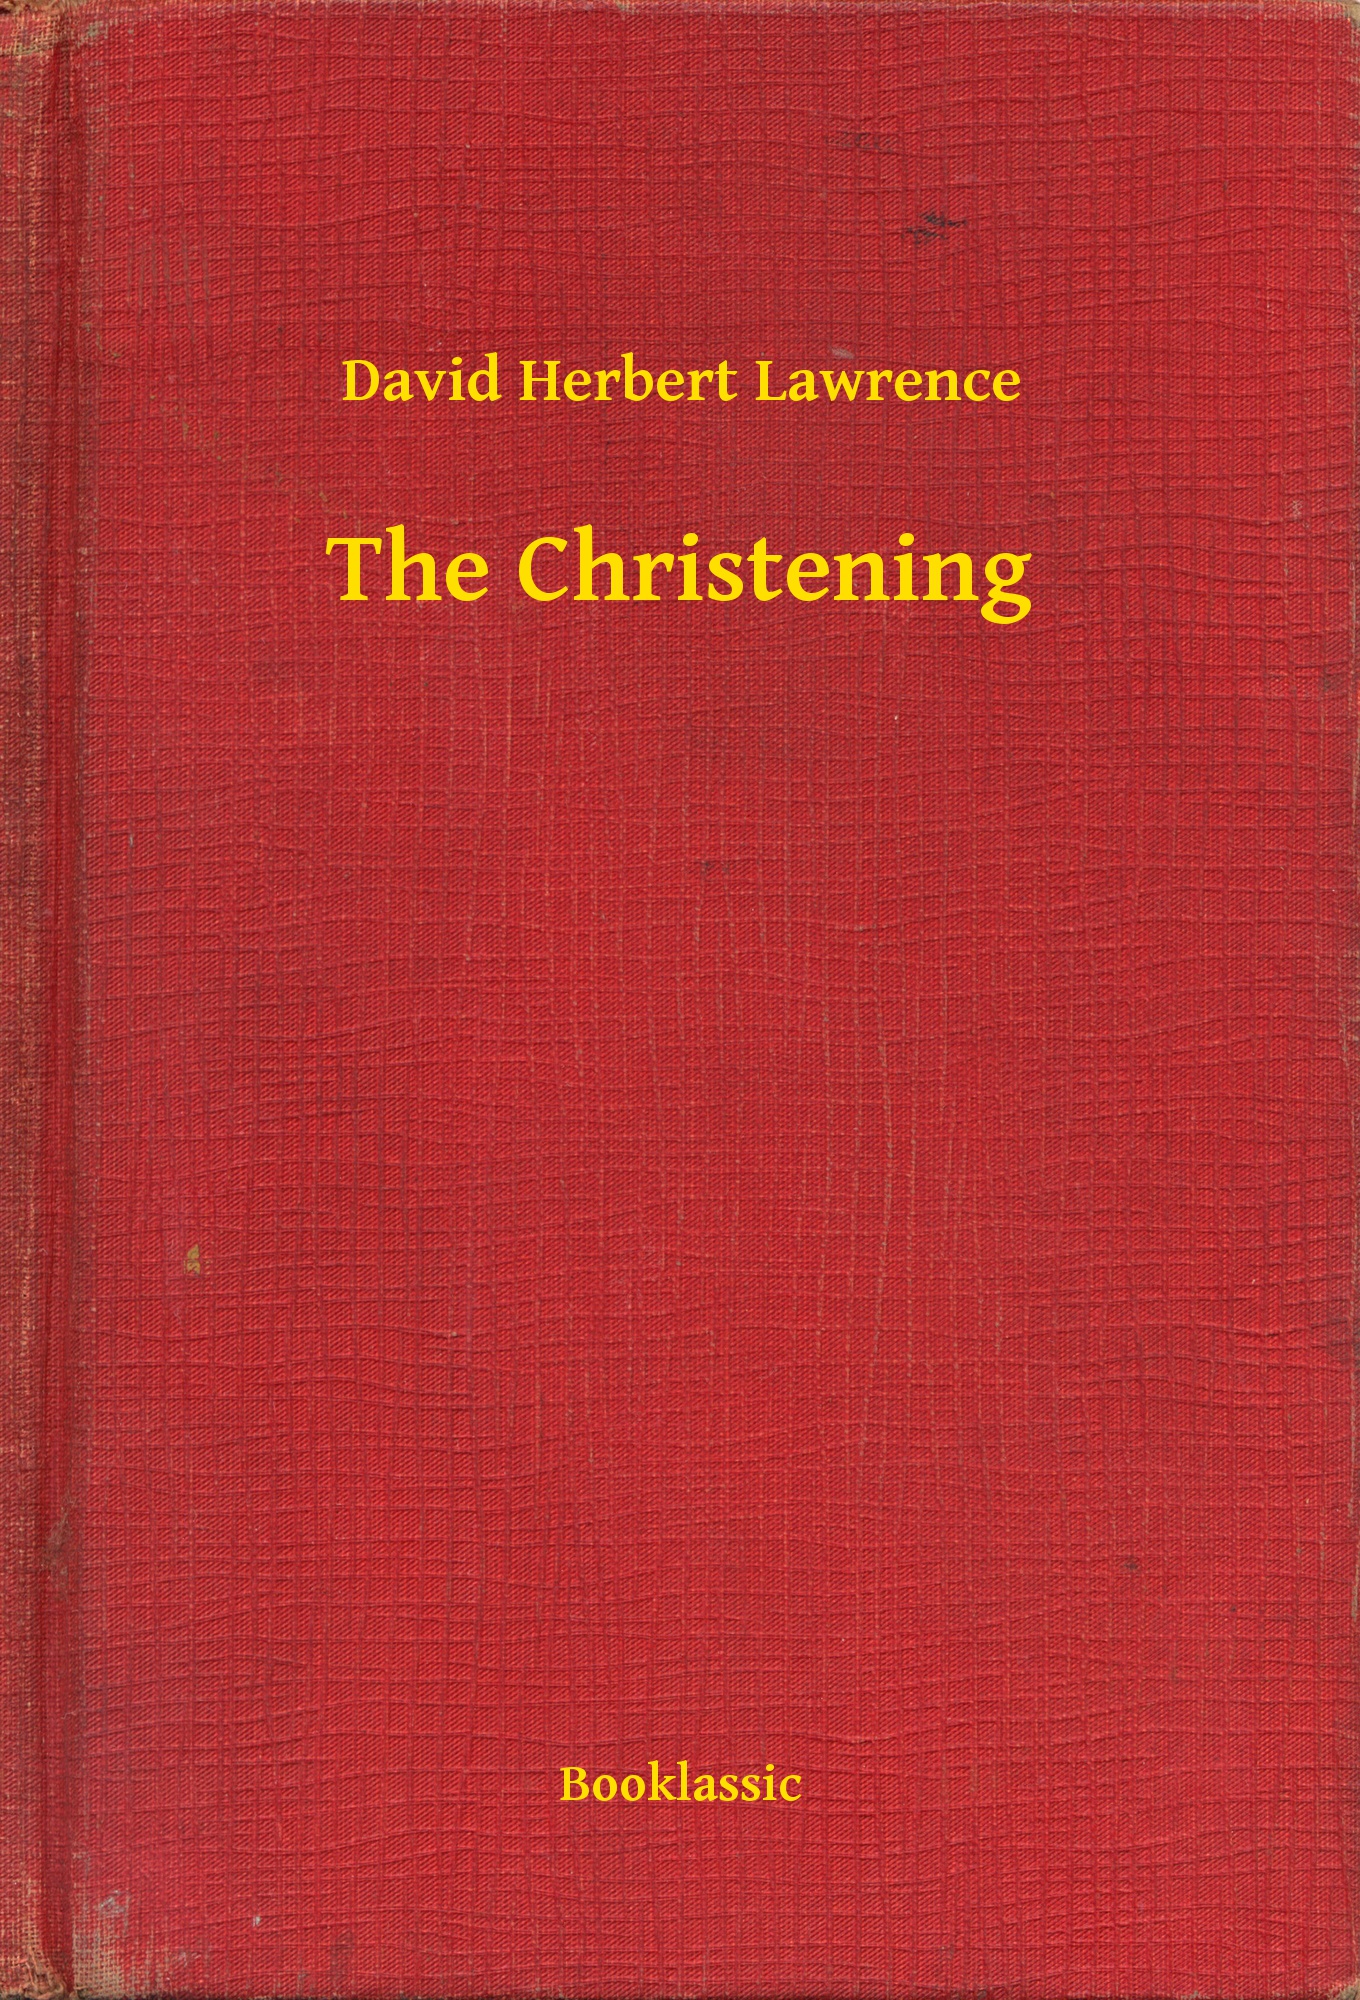 The Christening